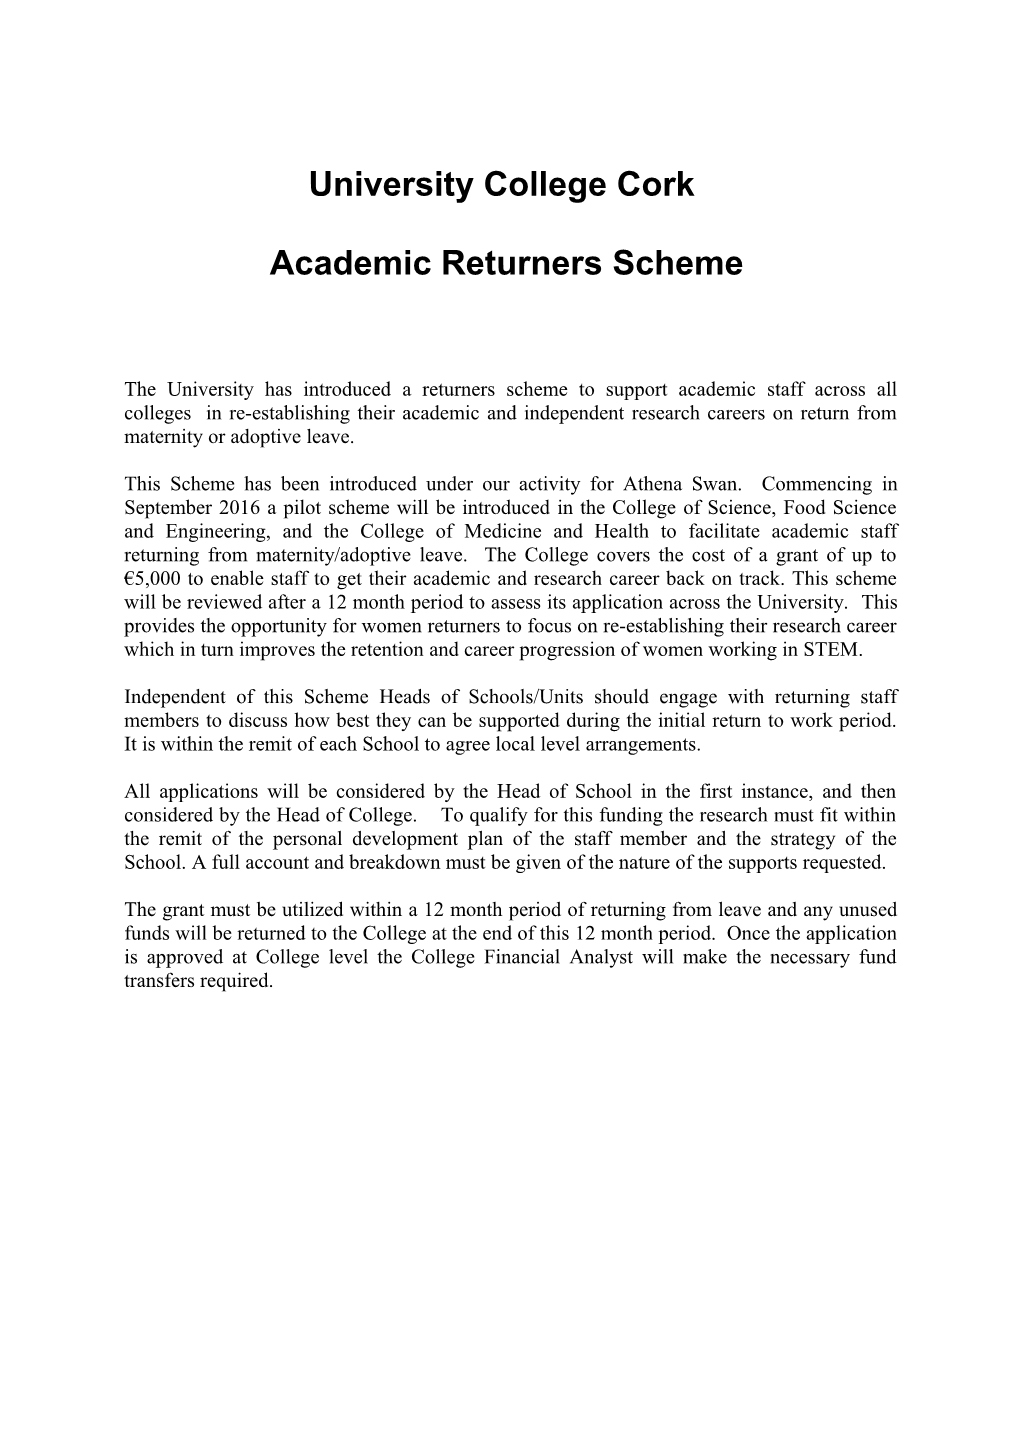 Academic Returners Scheme